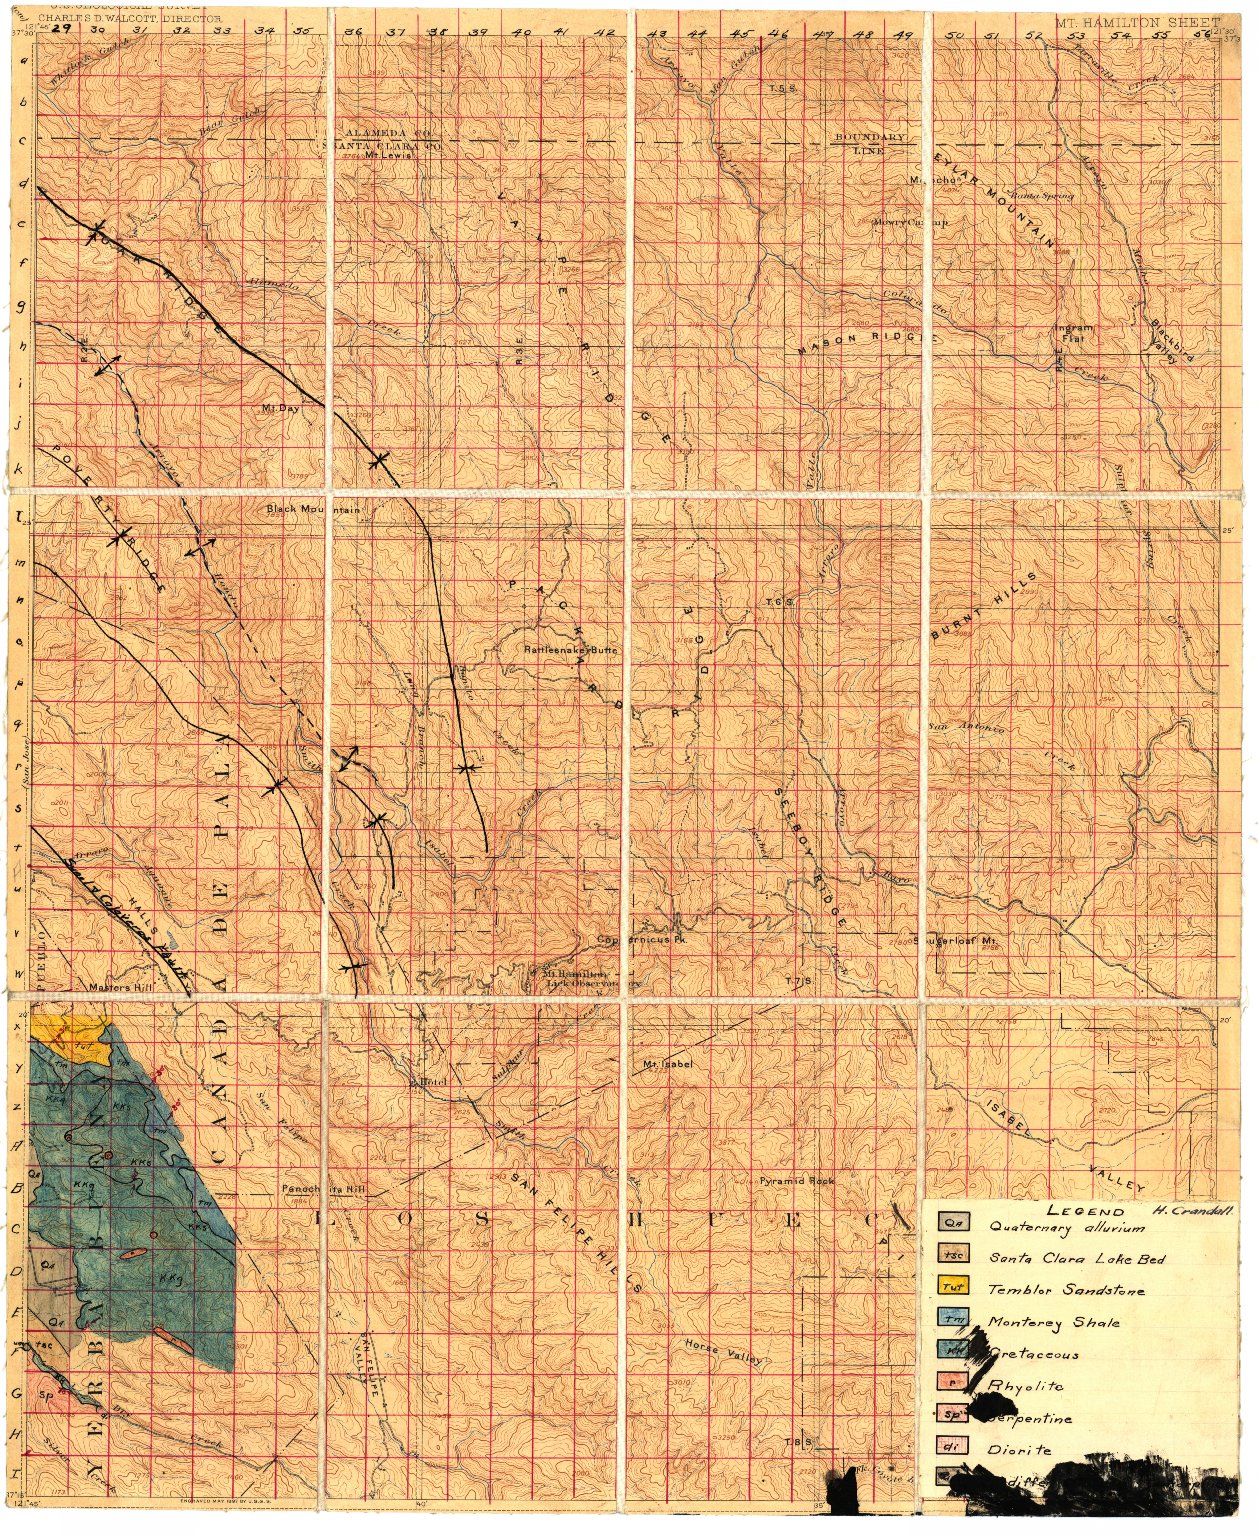 California, Mt. Hamilton sheet: